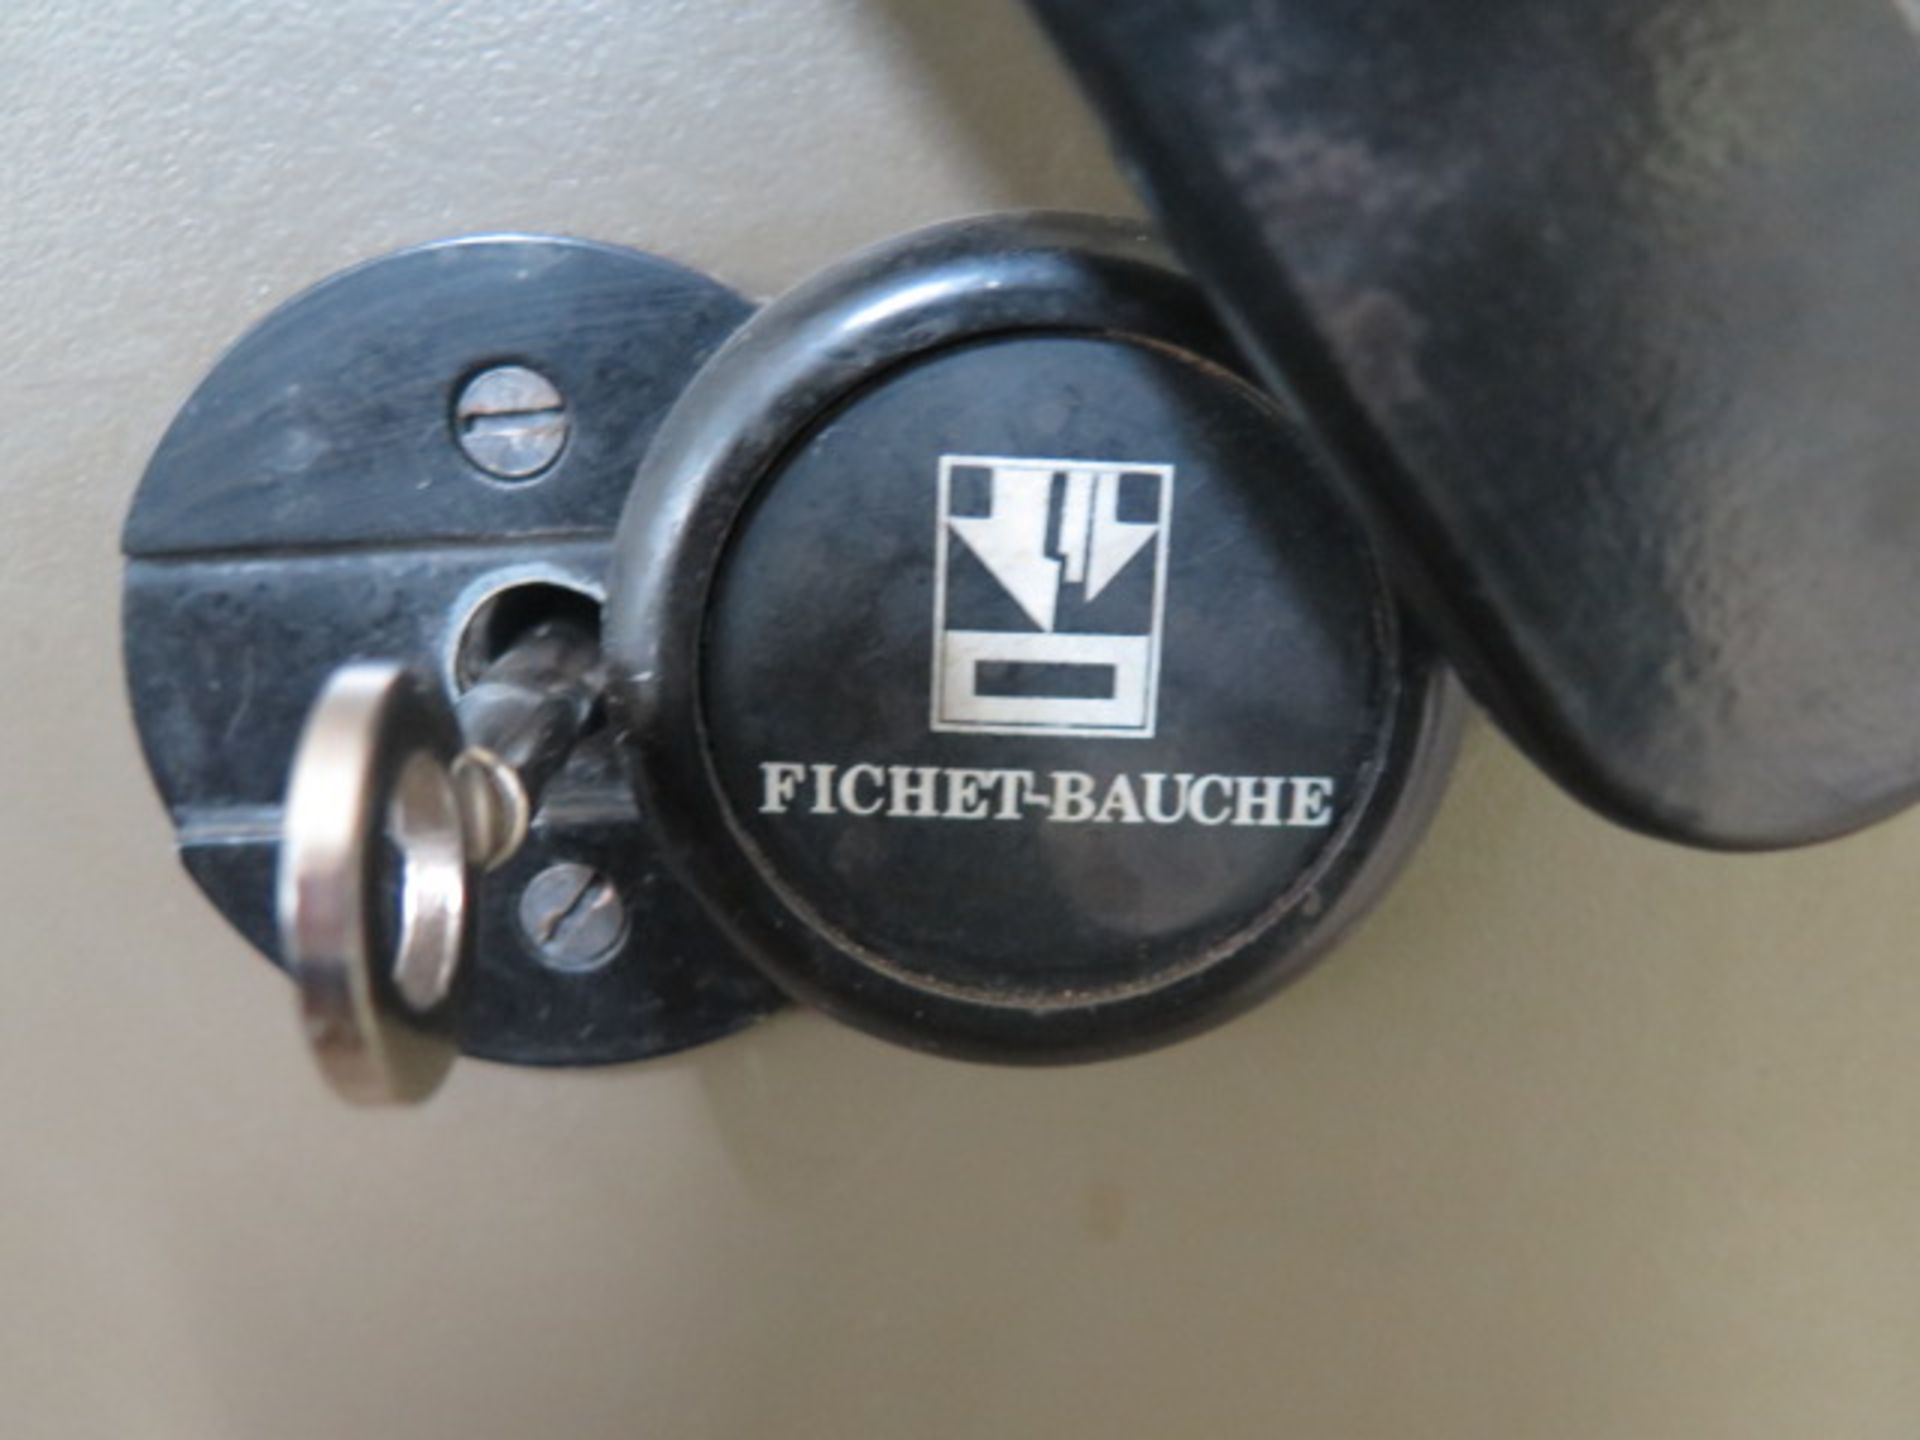 Fichet-Bauche Jewelers Safe - Image 2 of 5